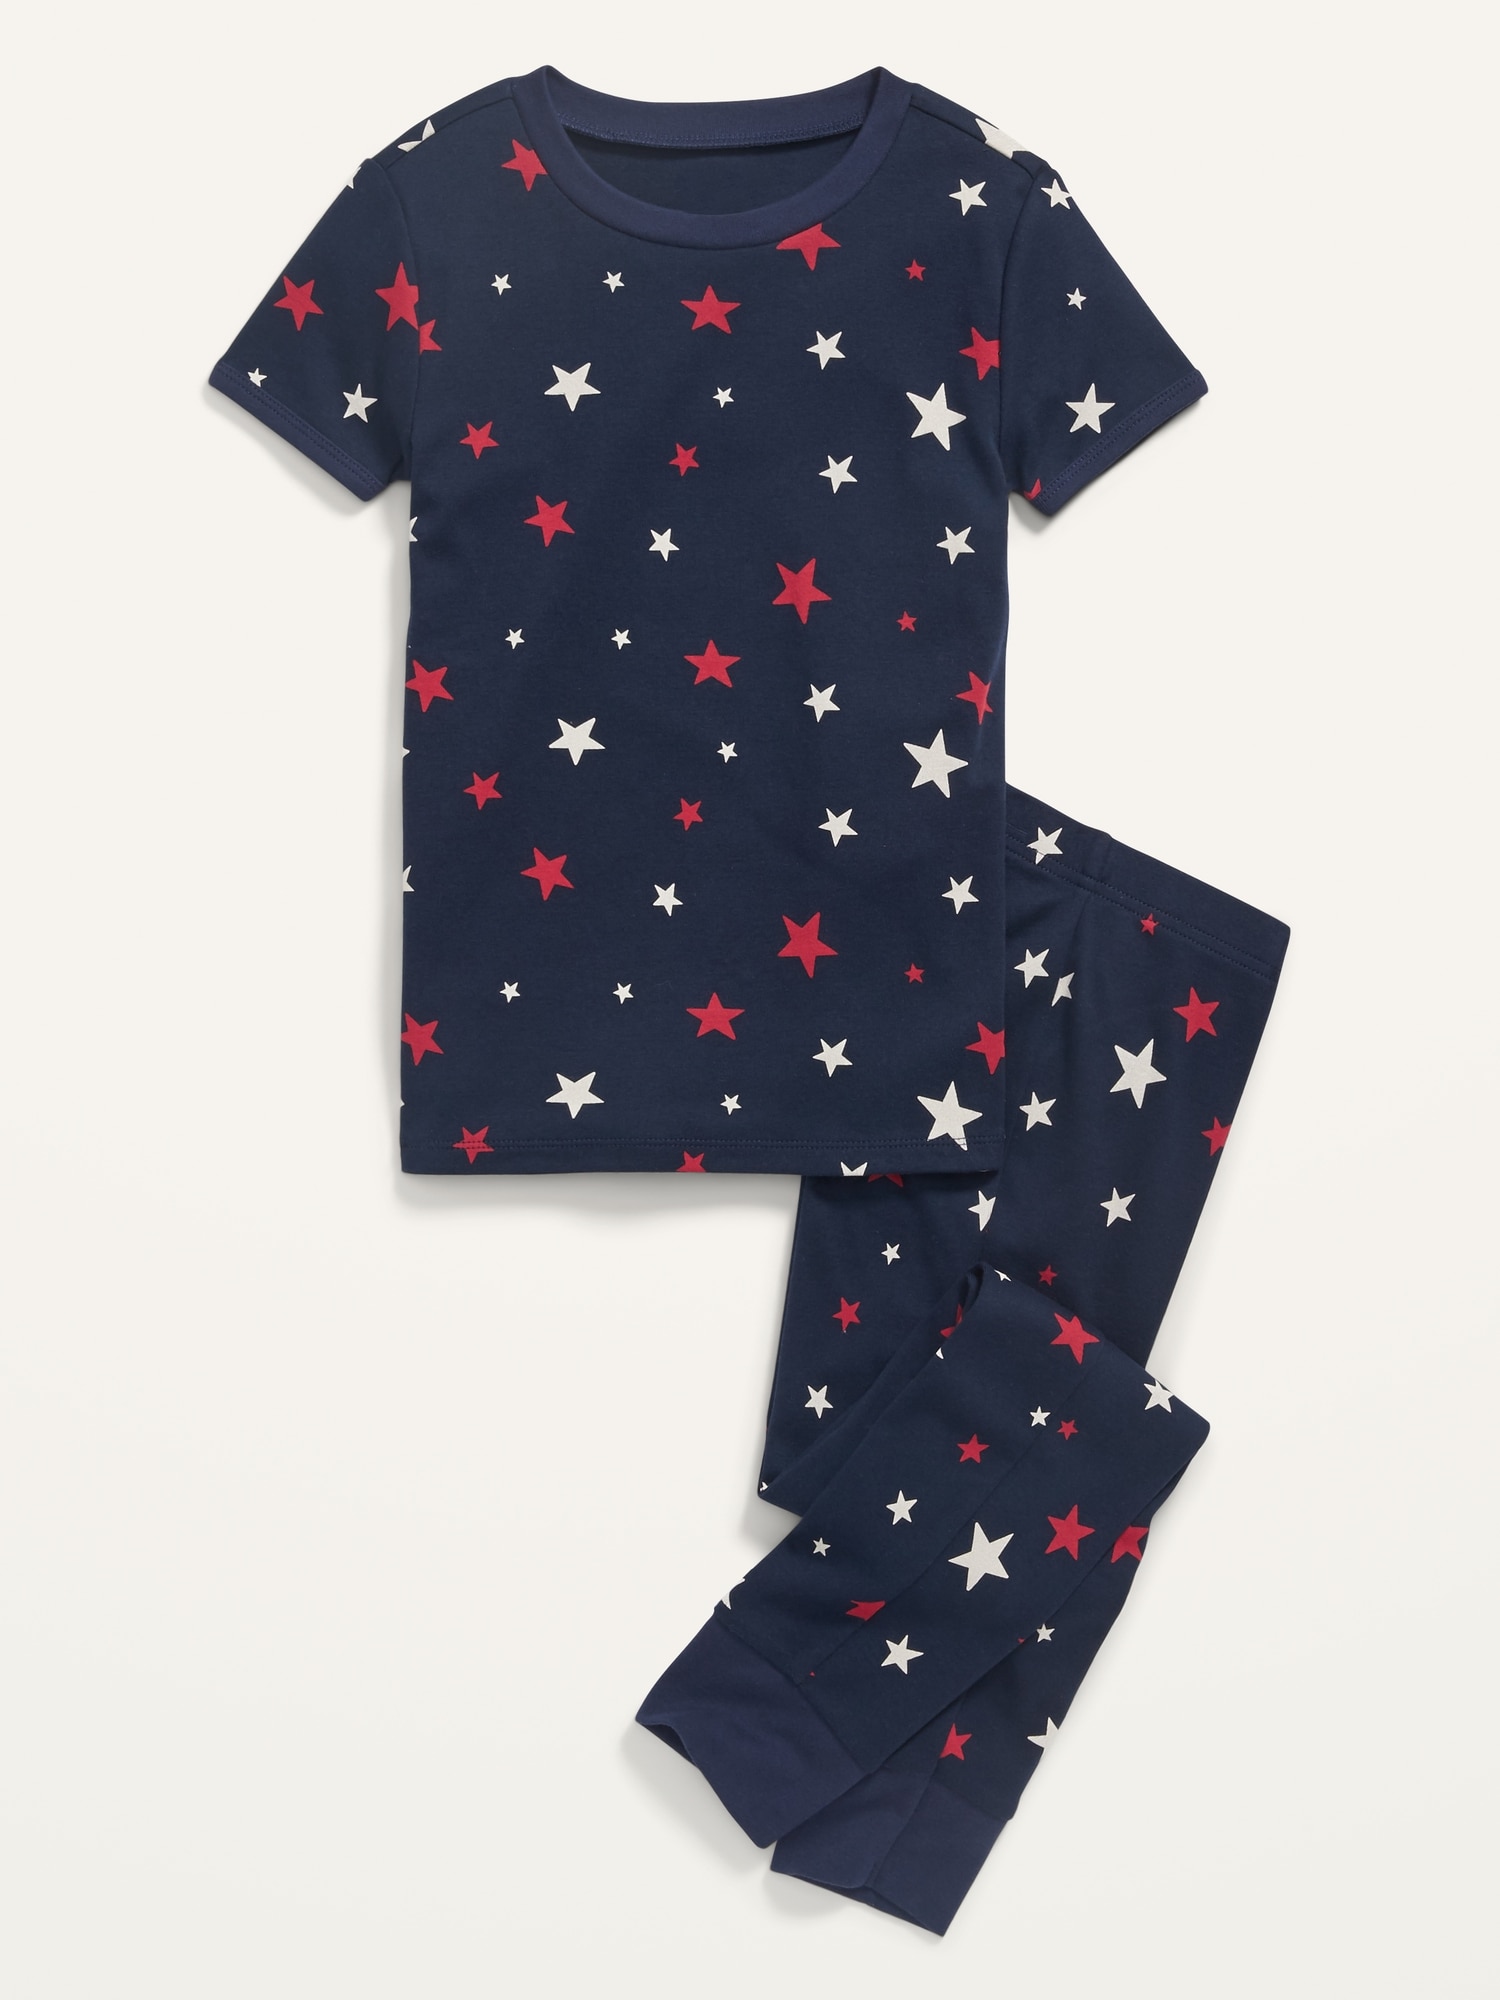 Gender-Neutral Printed Snug-Fit Pajama Set For Kids